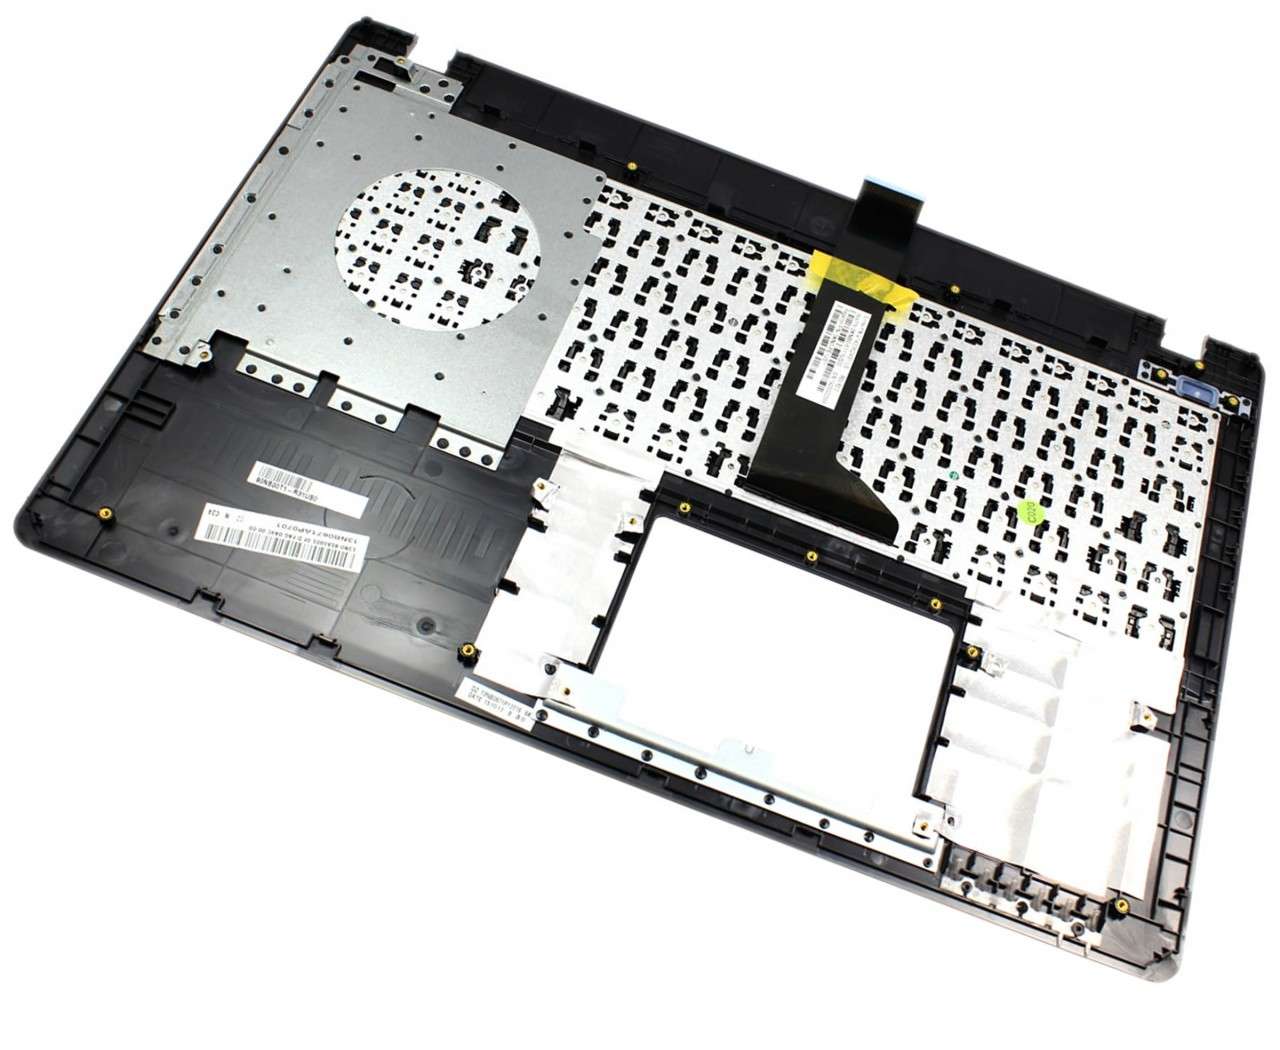 Tastatura Asus D552DP neagra cu Palmrest argintiu